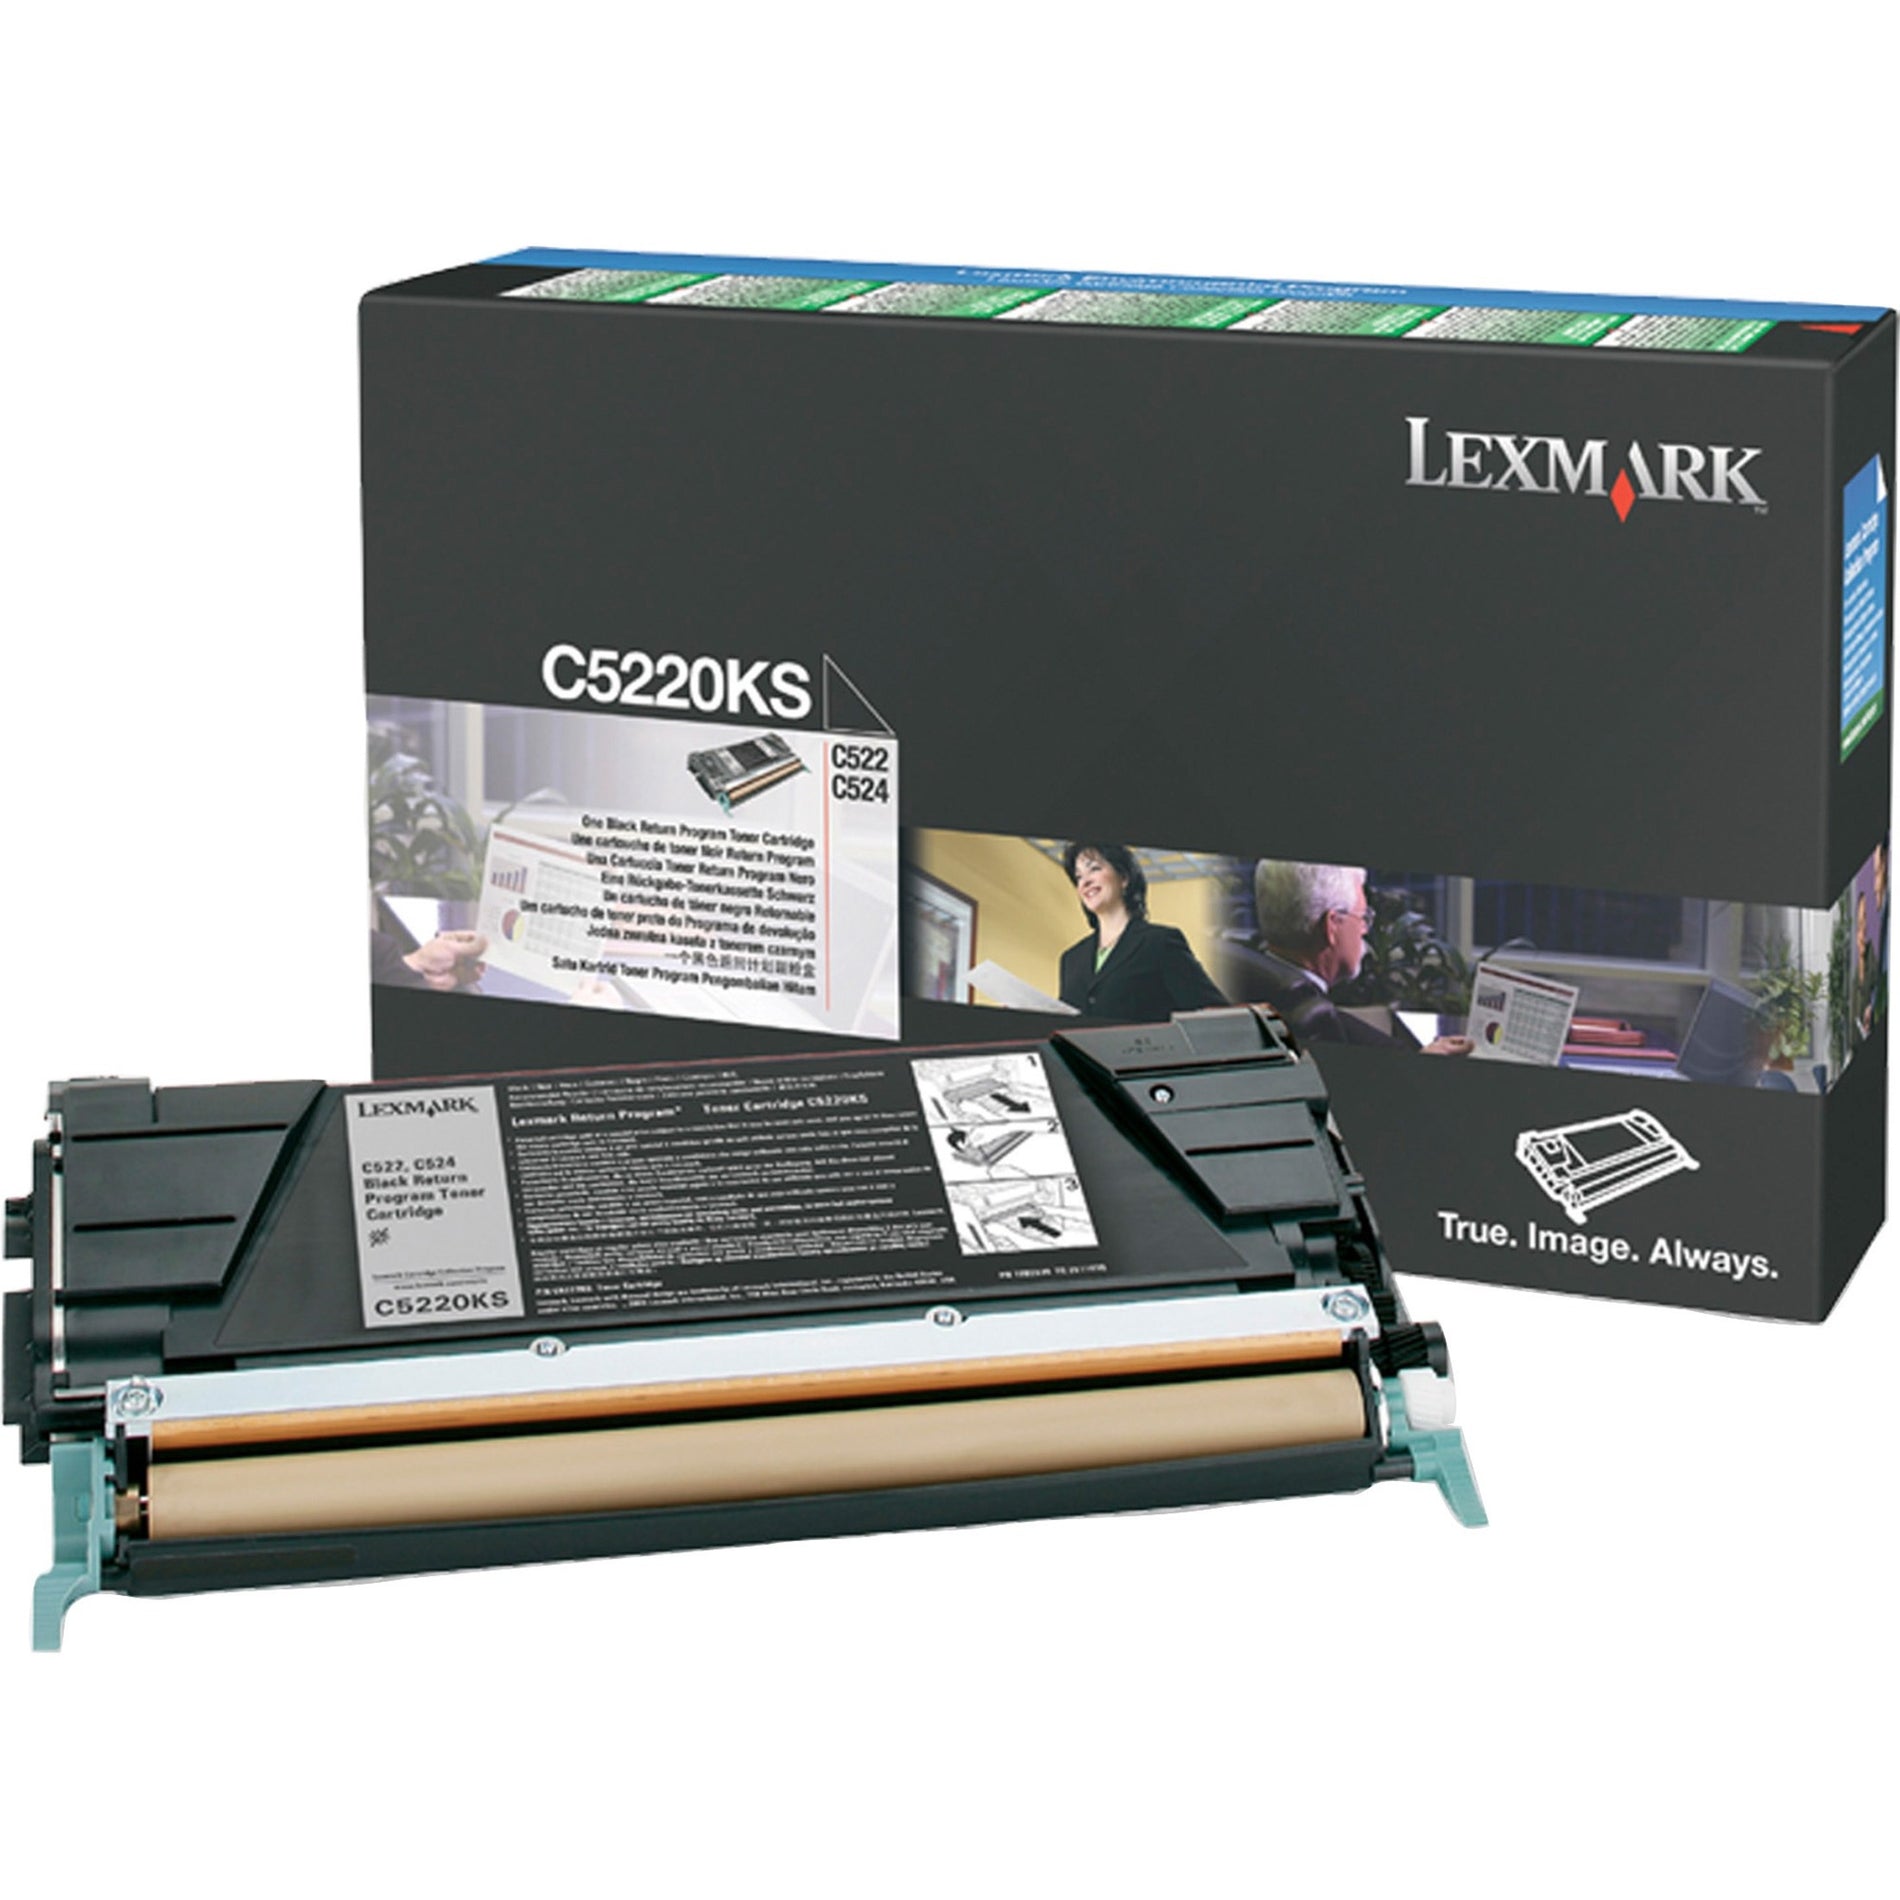 Lexmark C5220KS C5220 Series Toner Cartridge, 4000 Page Yield, Black